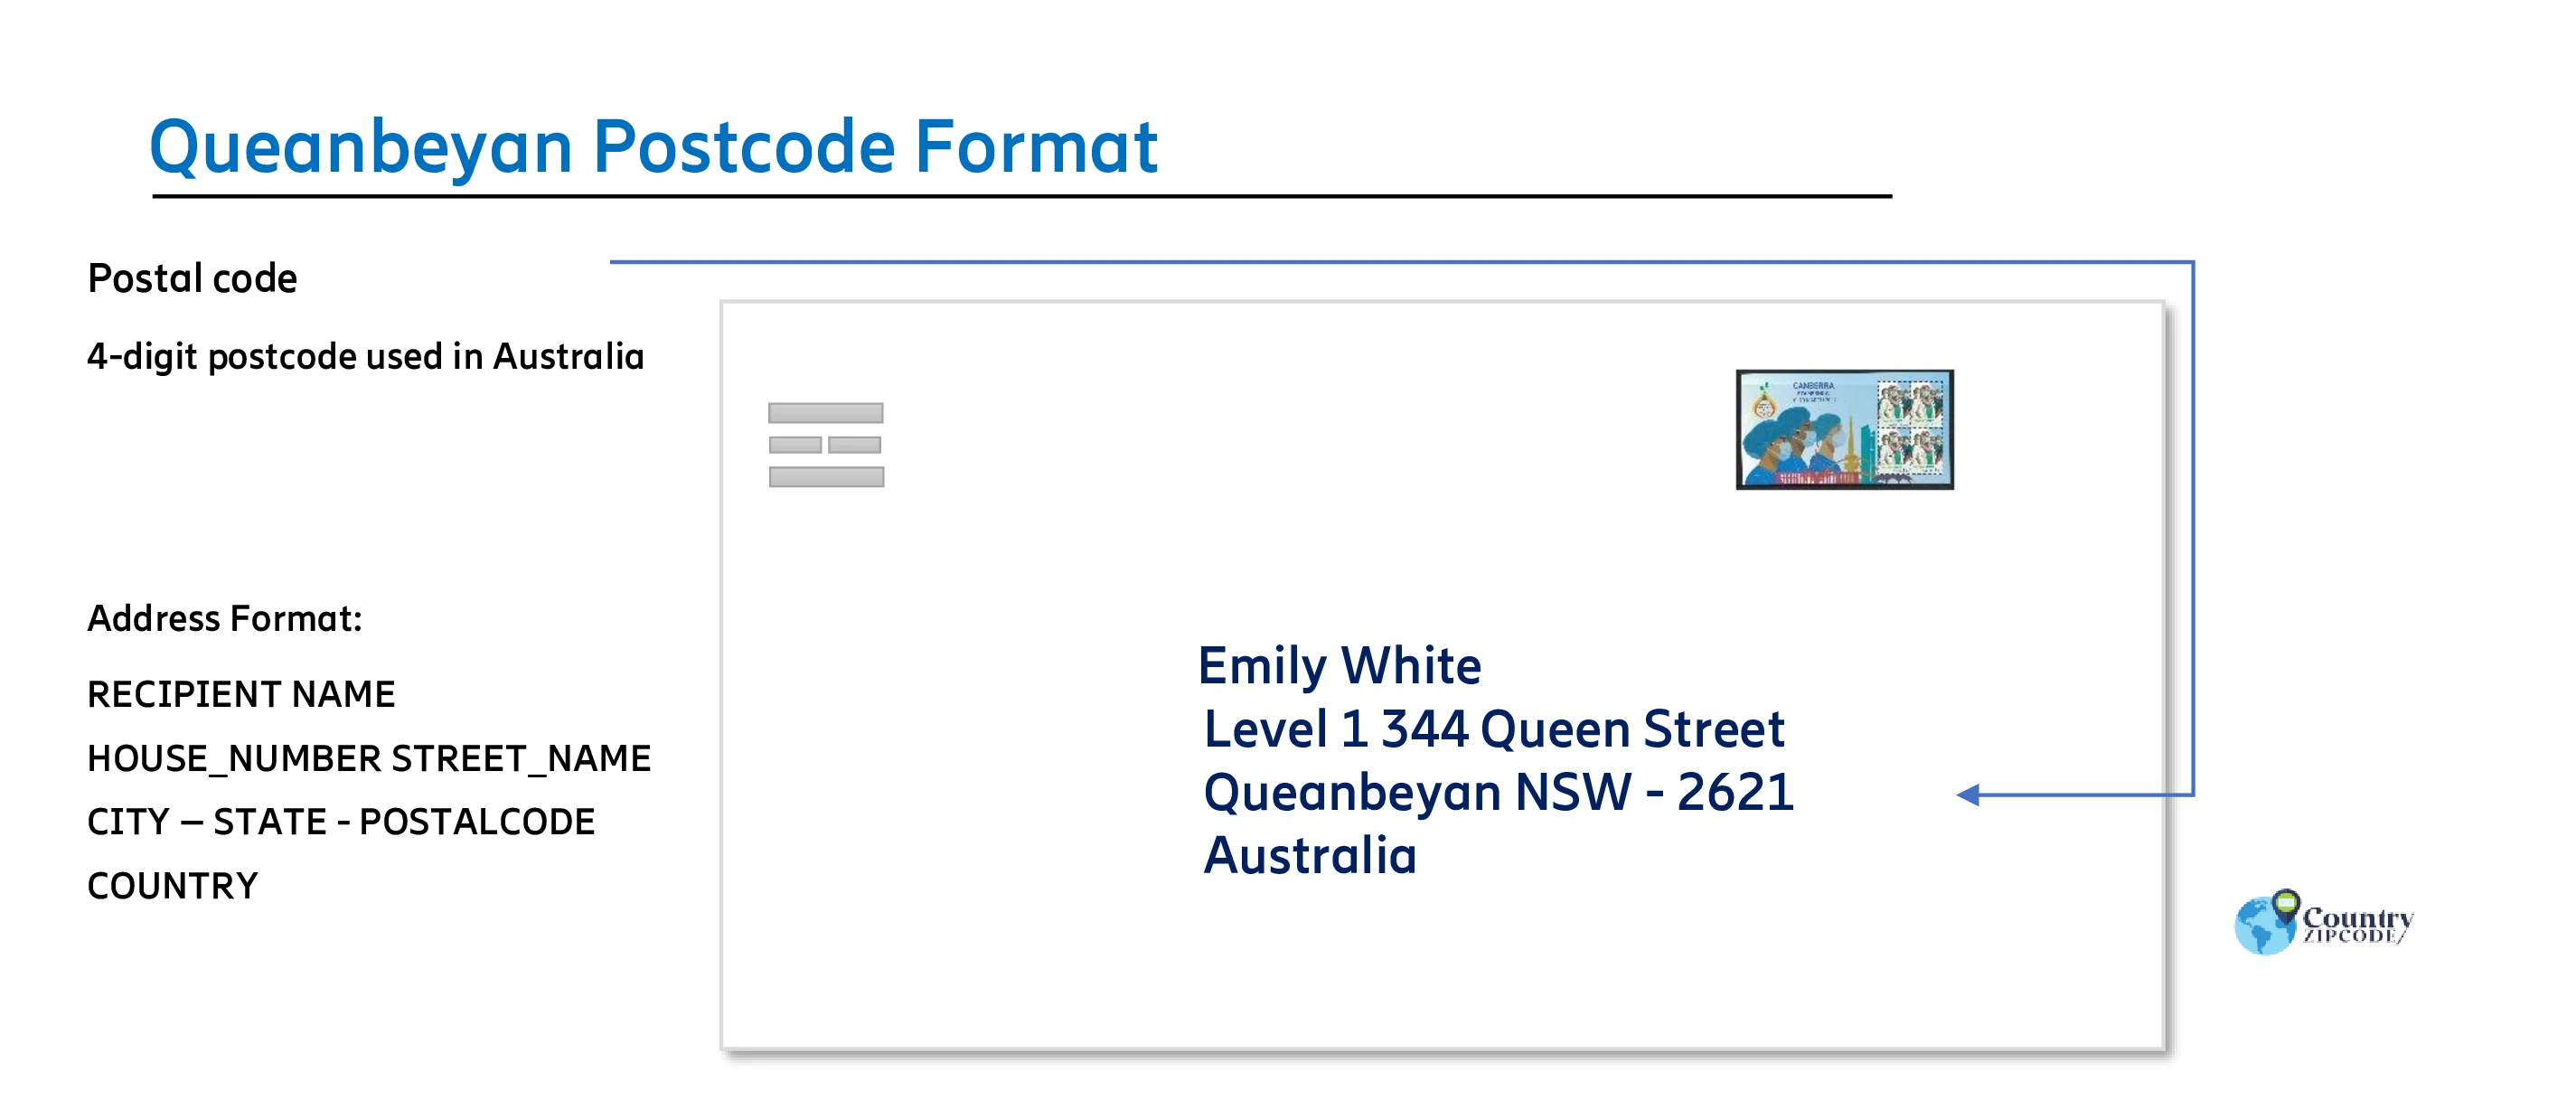 Queanbeyan Australia Postal code format